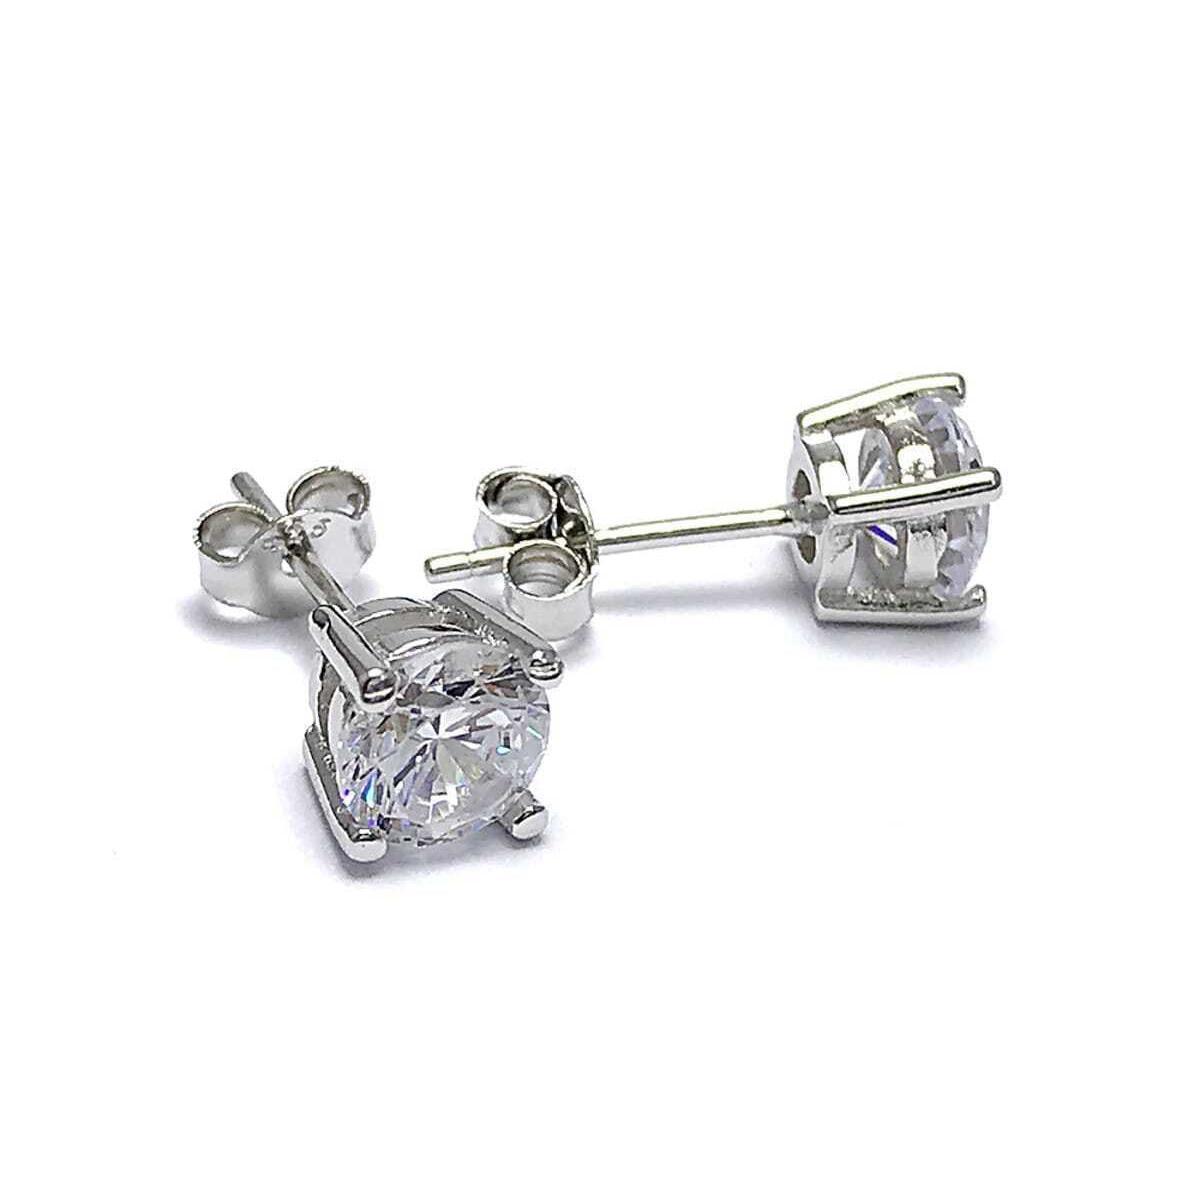 Solitaire Diamond Stud Earrings • Solitaire Diamond Earrings - Trending Silver Gifts